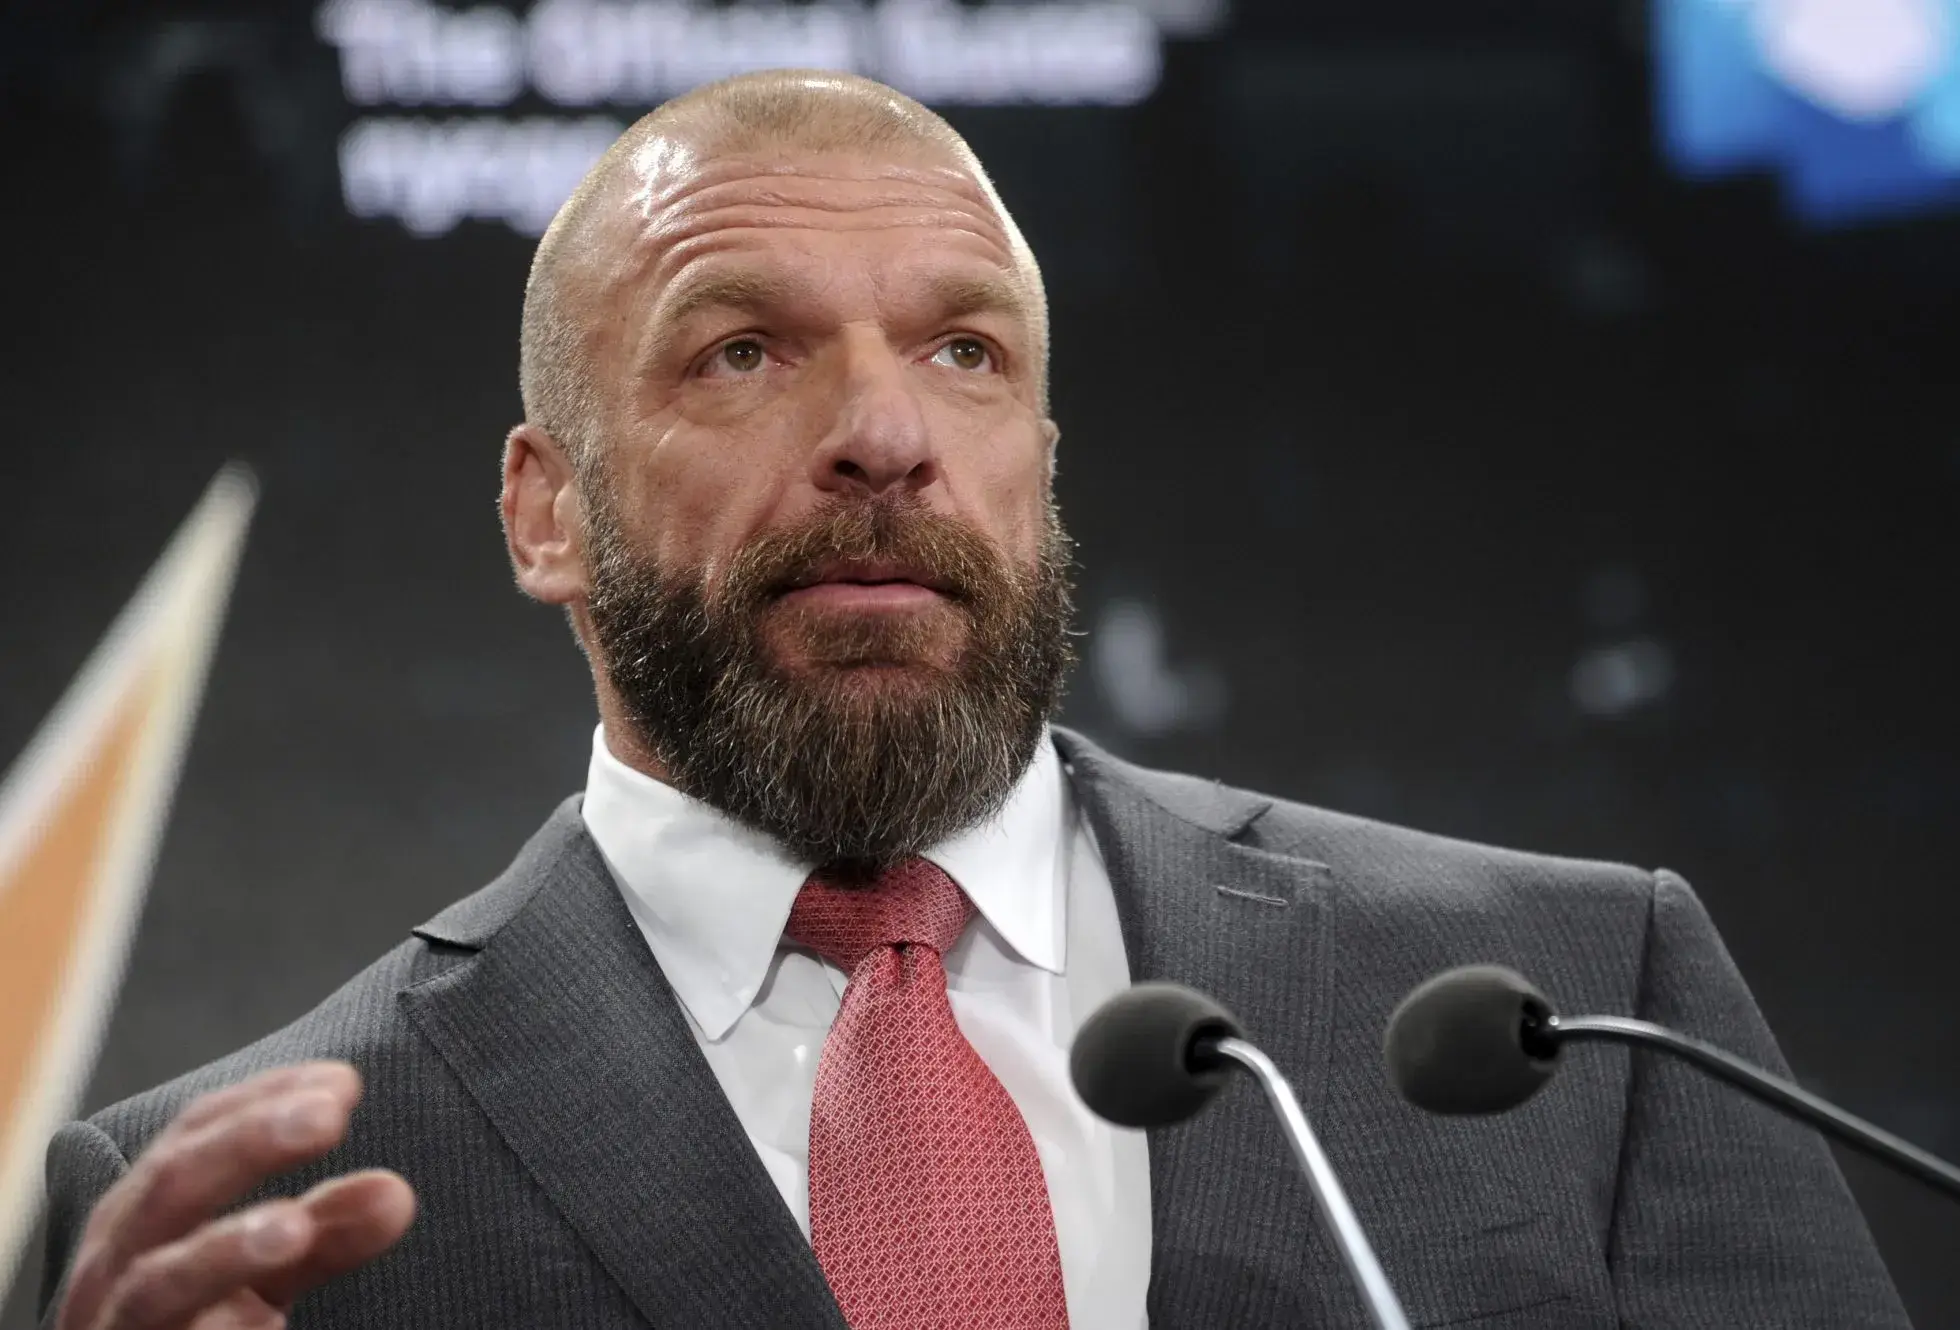 Triple H is WWE's new Head of Creative